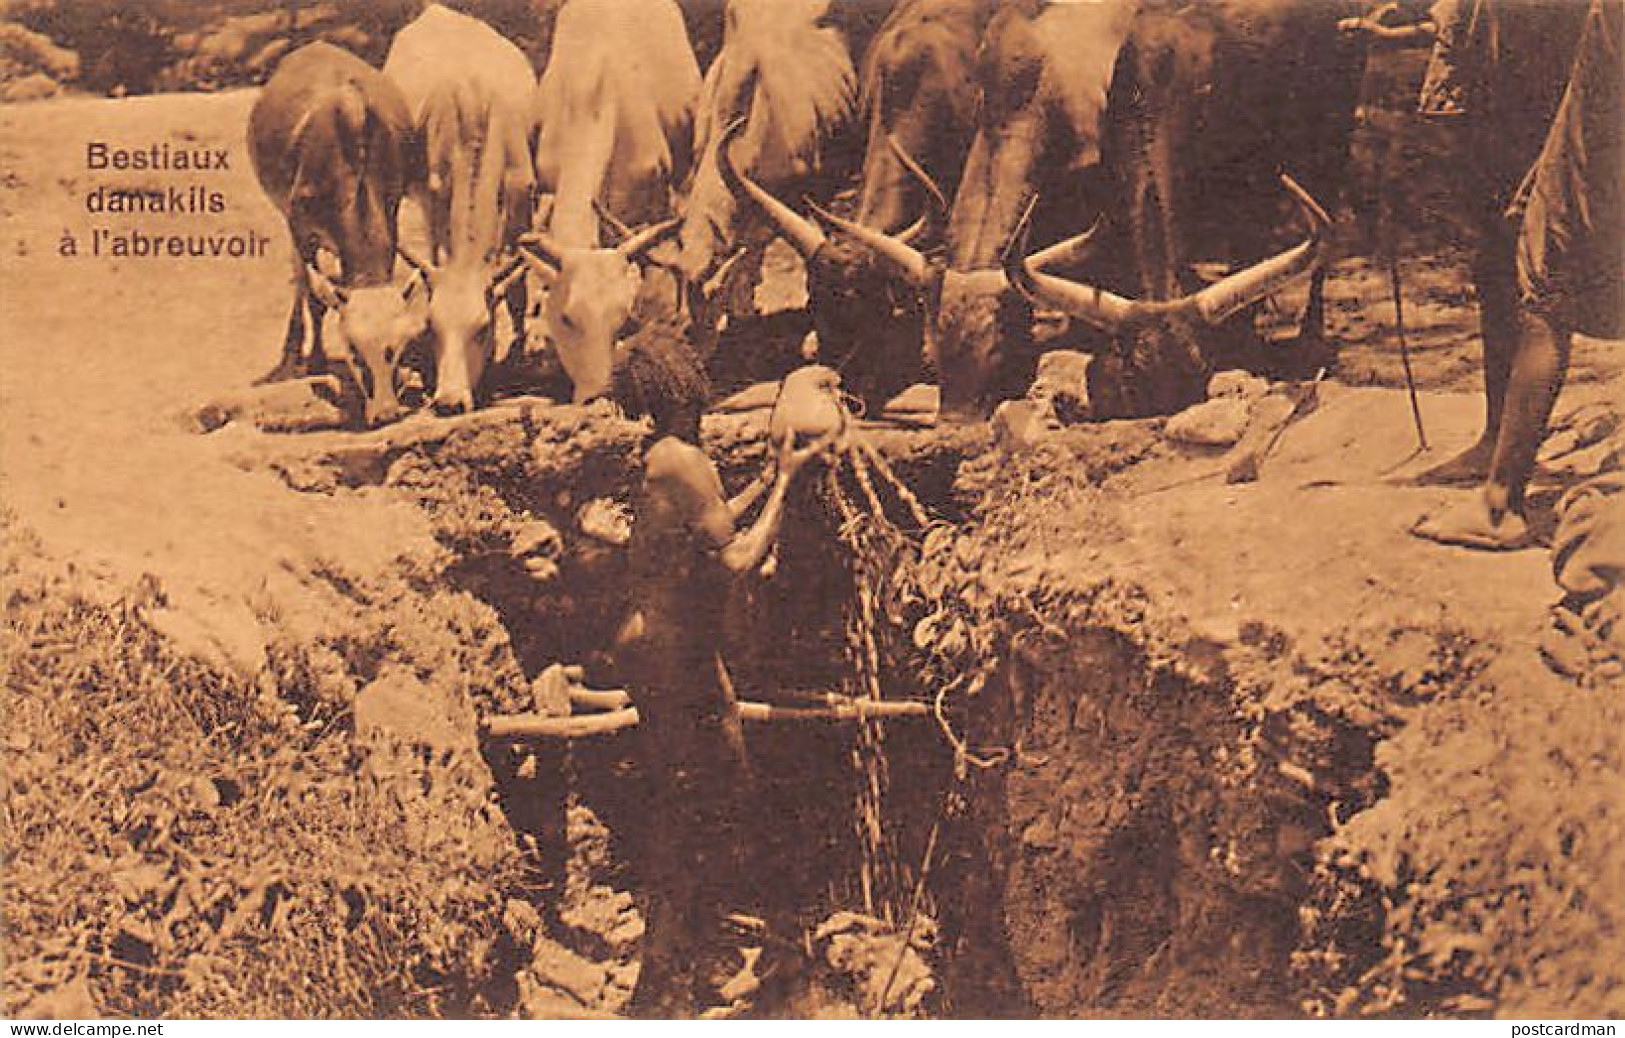 Ethiopia - Dankali Cattle At The Watering Hole - Publ. J. A. Michel 6883 - Ethiopië